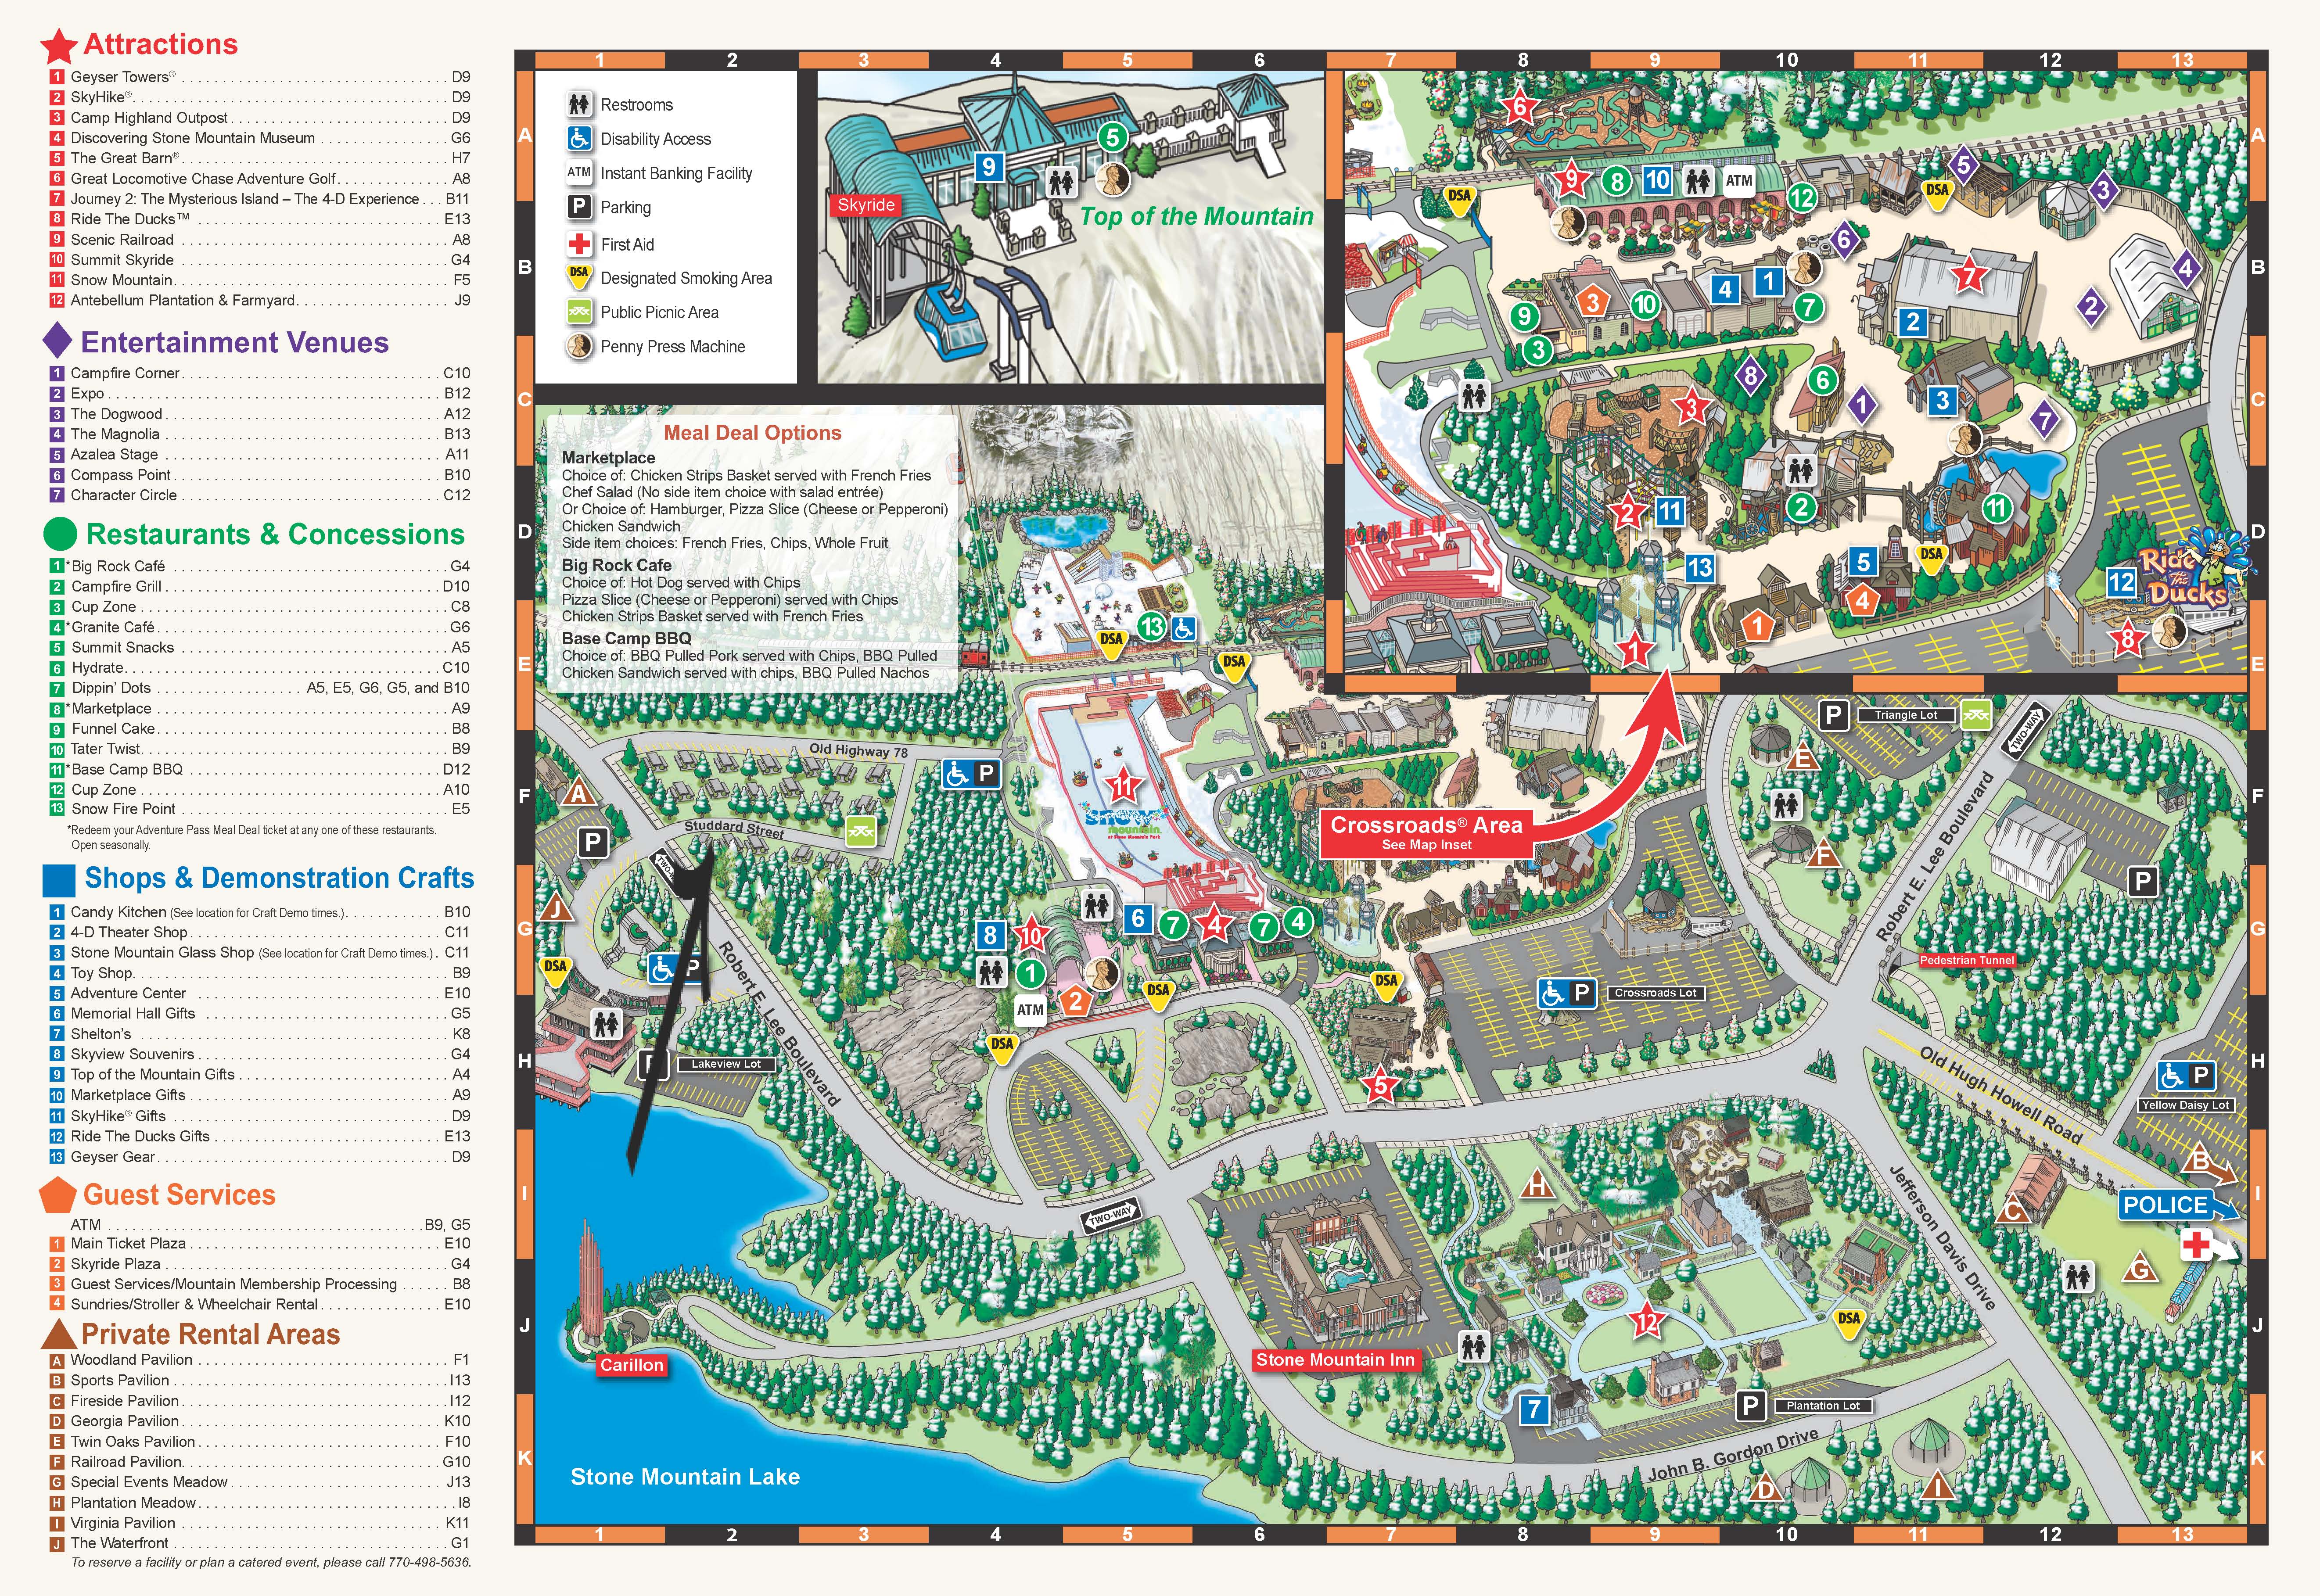 Stone-Mountain-Park-Map-2015.jpg : 꾸르실리스따 친선 골프대회